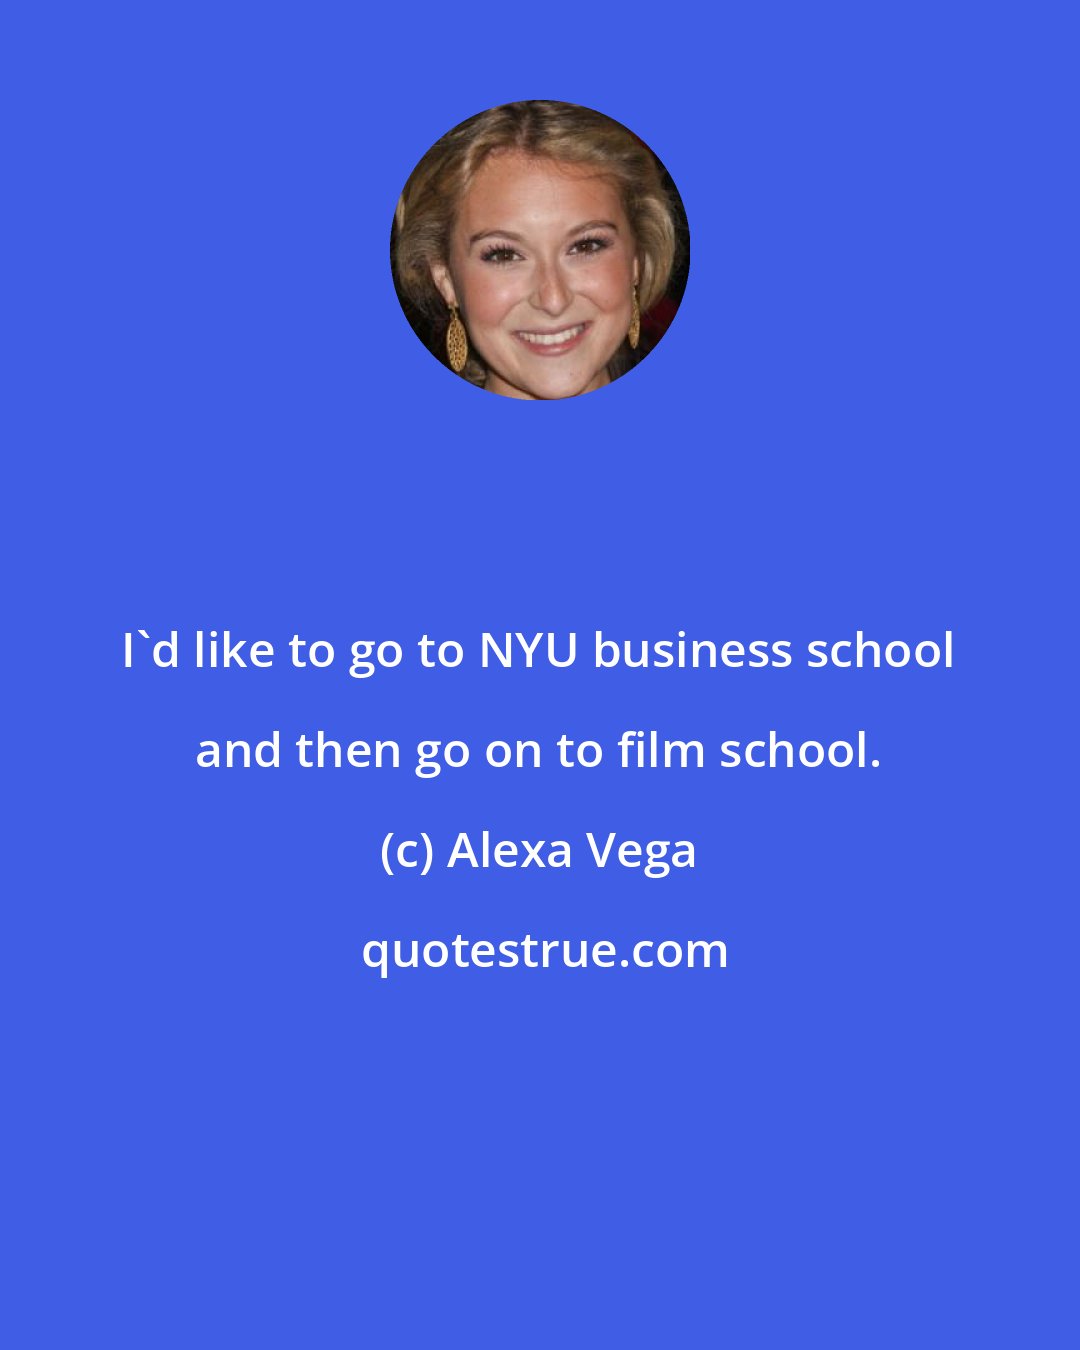 Alexa Vega: I'd like to go to NYU business school and then go on to film school.